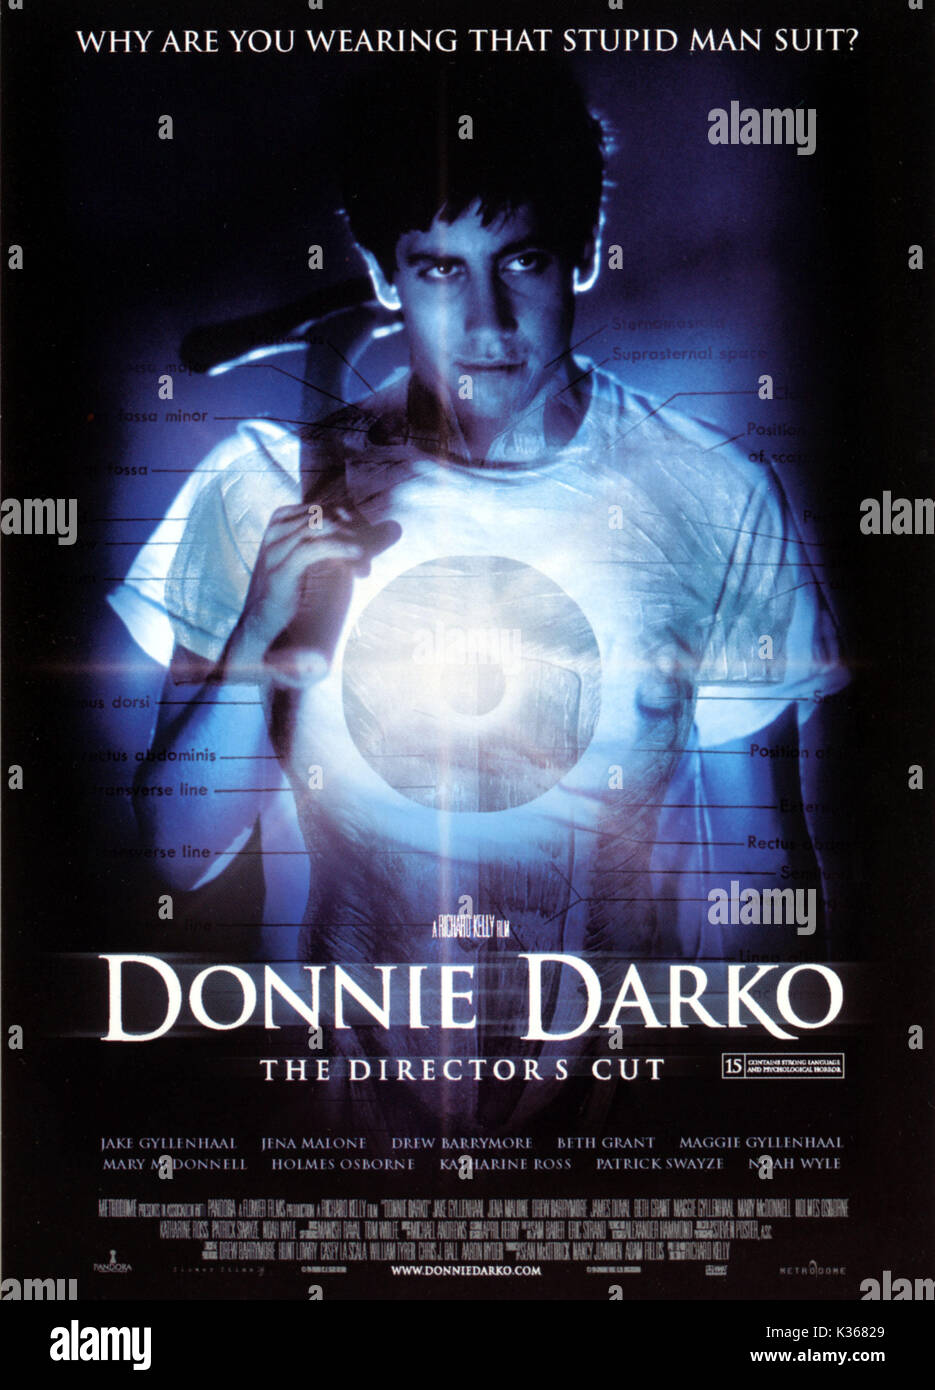 DONNIE DARKO (US 2001) DONNIE DARKO THE DIRECTOR'S CUT (US 2004)   DONNIE DARKO (US 2001) DONNIE DARKO THE DIRECTOR'S CUT (US 2004)     Date: 2001 Stock Photo